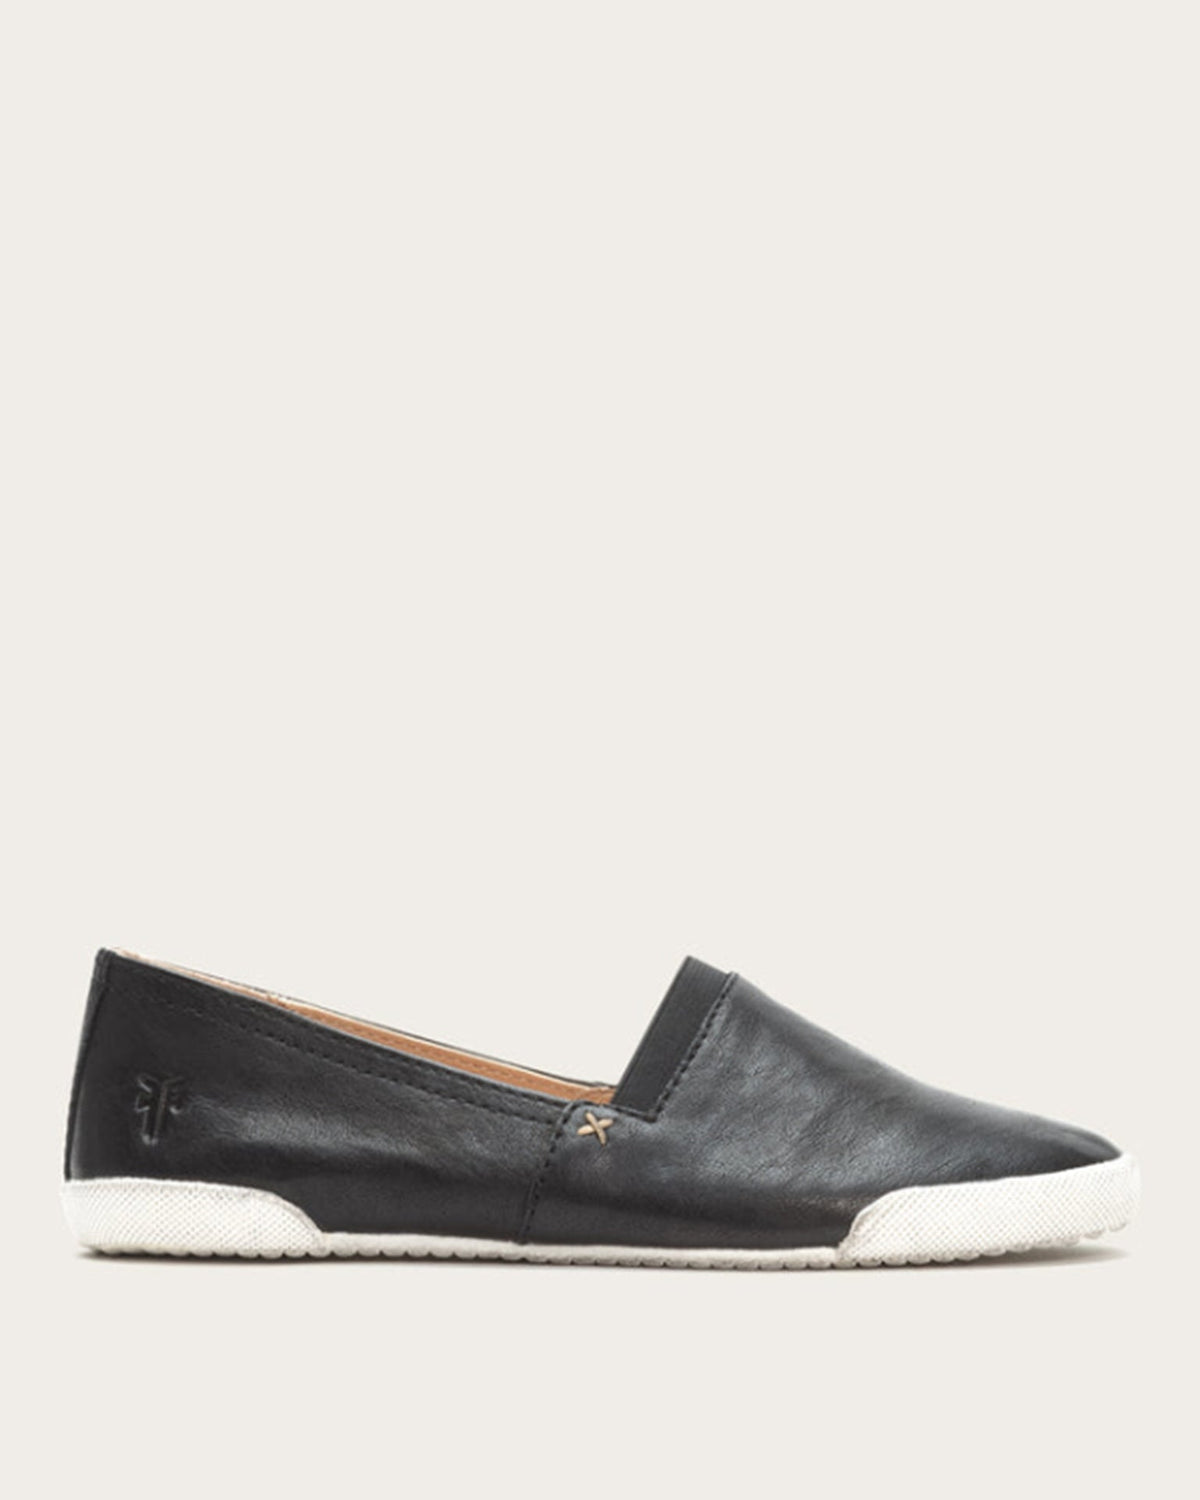 The Frye Company Shoes Melanie Slip On in Black